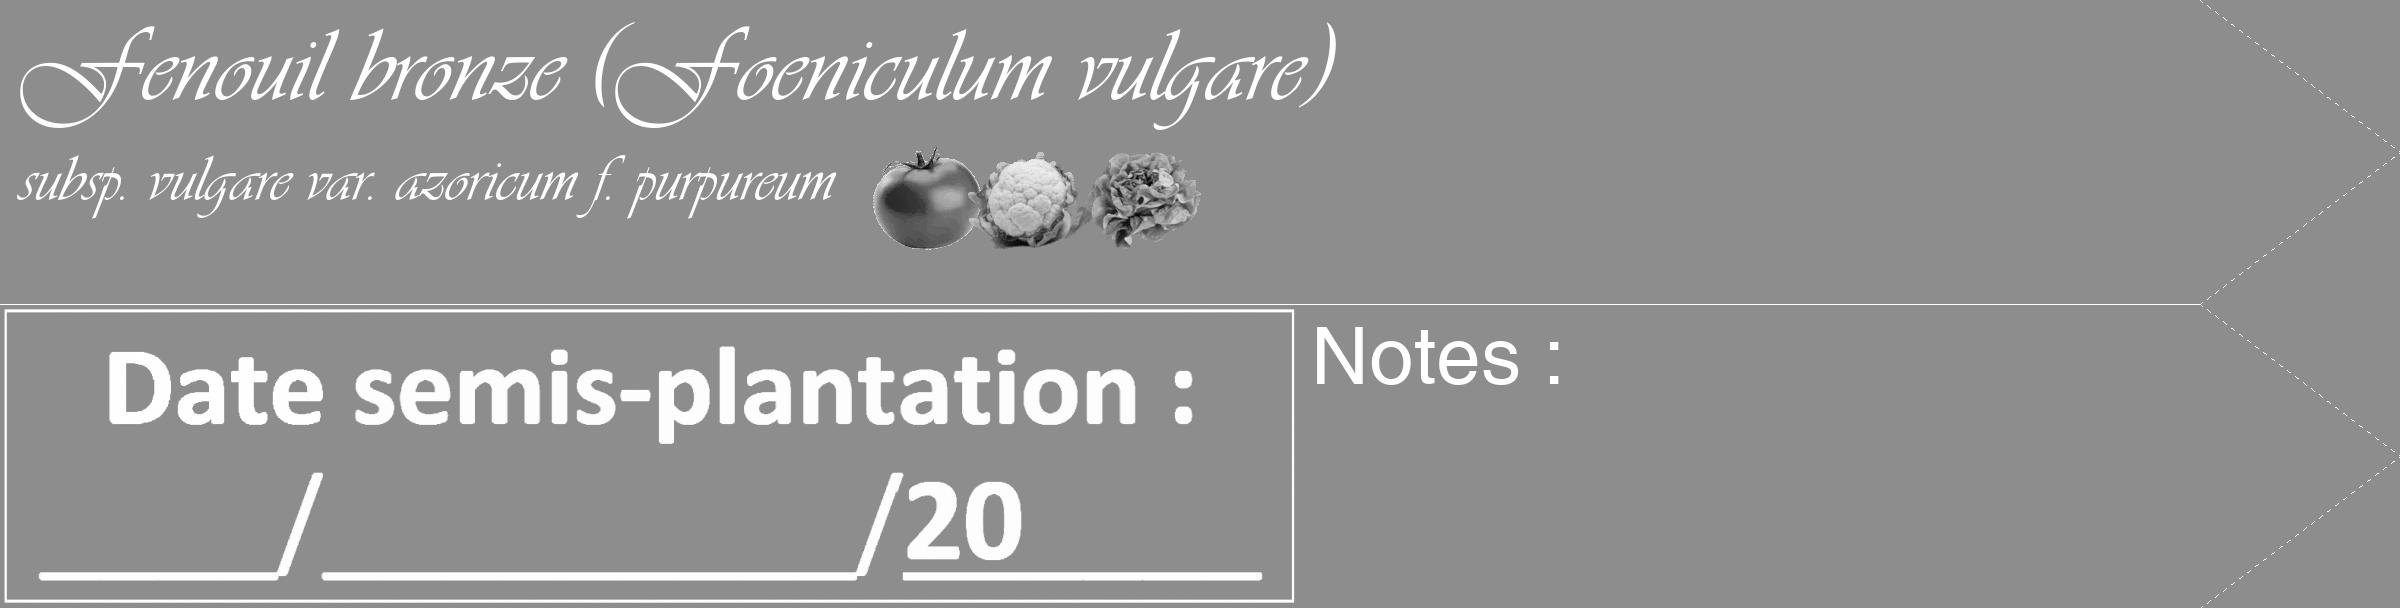 Étiquette de : Foeniculum vulgare subsp. vulgare var. azoricum f. purpureum - format c - style blanche2_simple_simpleviv avec comestibilité simplifiée